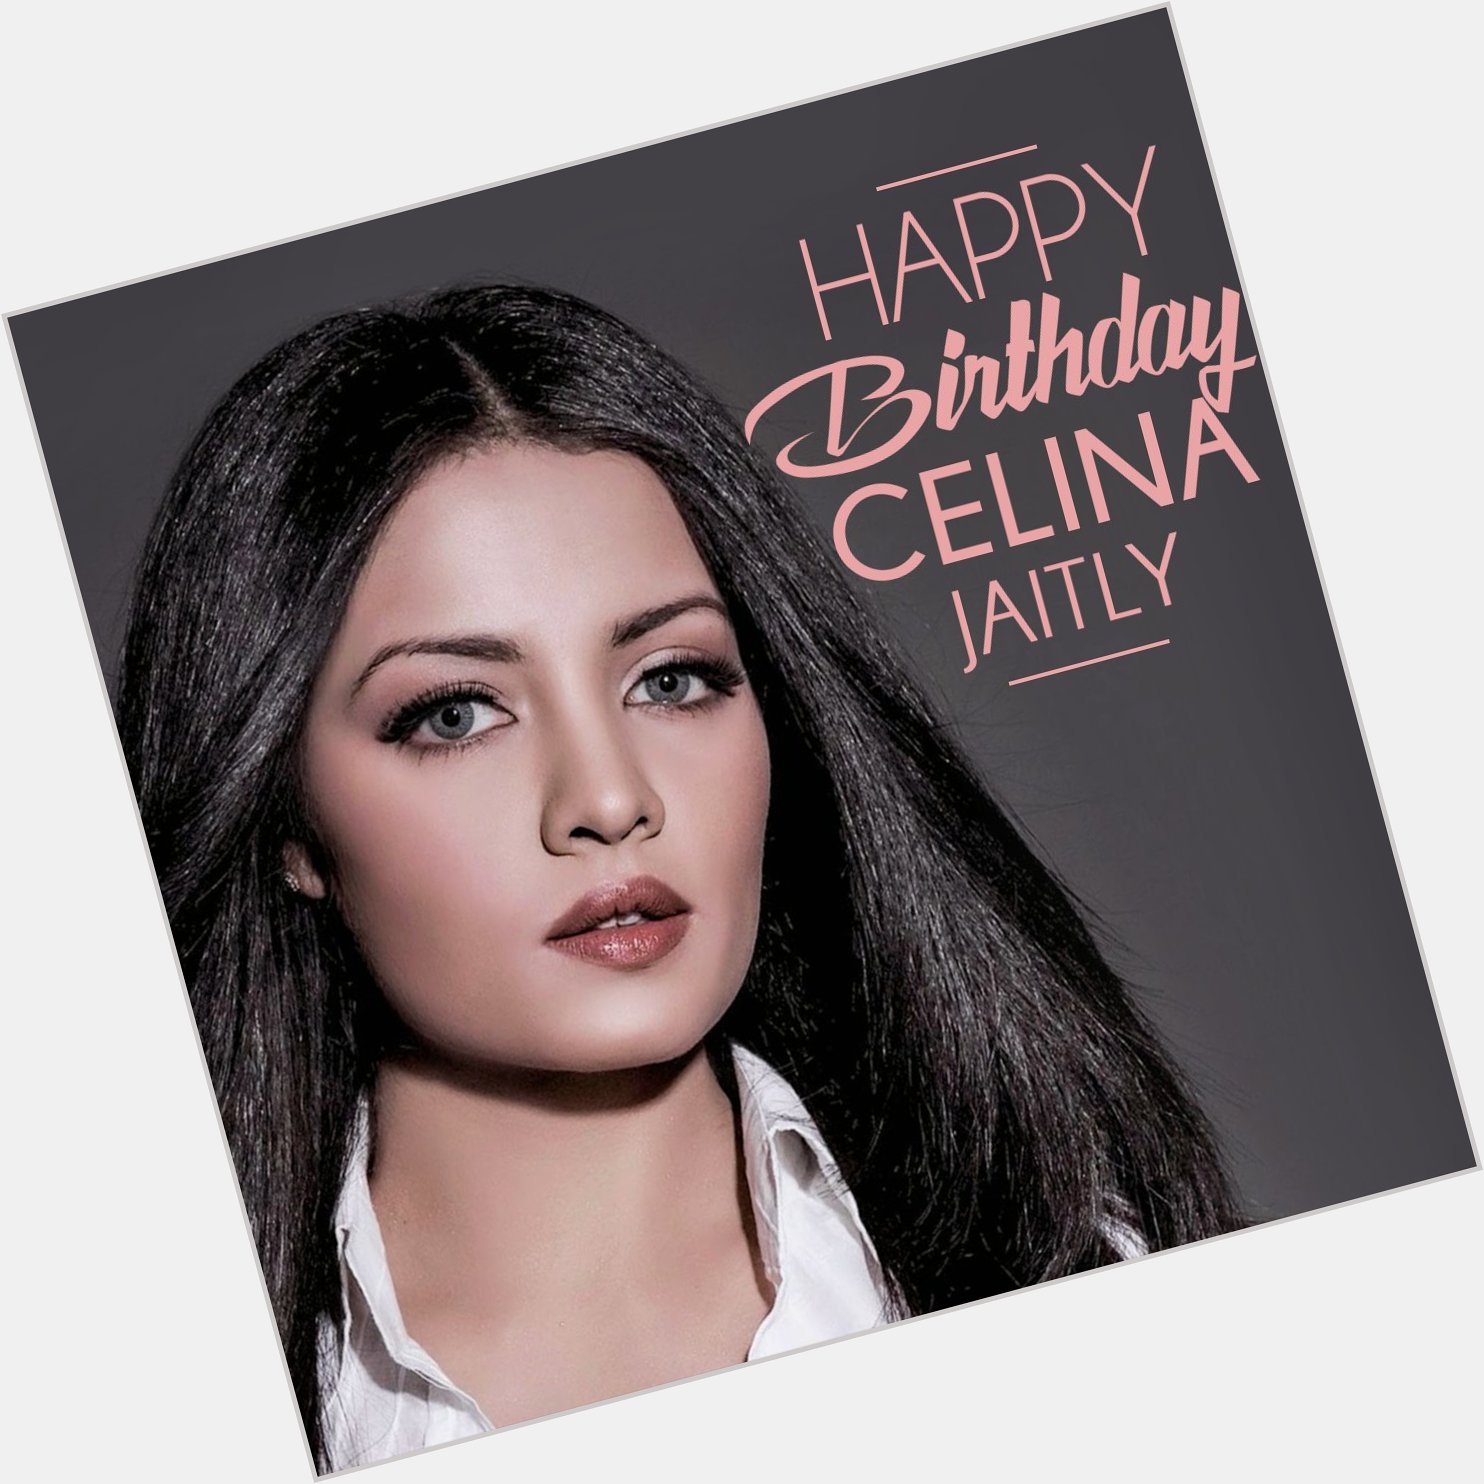 Here\s wishing the gorgeous Celina Jaitly, a very Happy Birthday!   